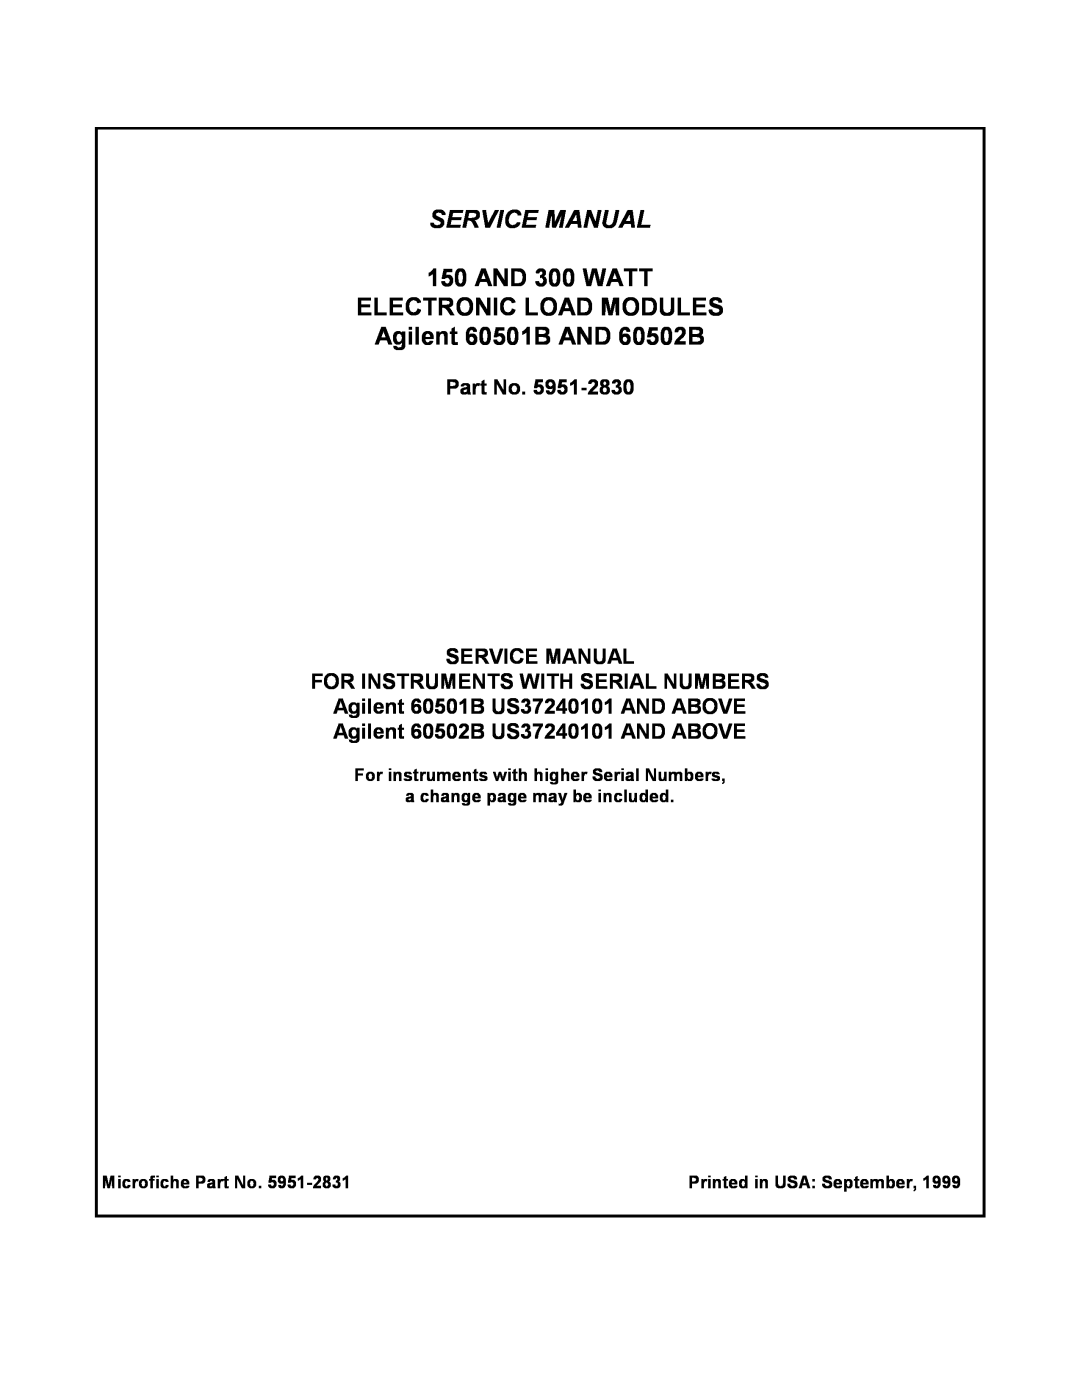 Agilent Technologies manual WATT ELECTRONIC LOAD MODULE Agilent Model 60501B, Operating Manual, Printed in U.S.A 